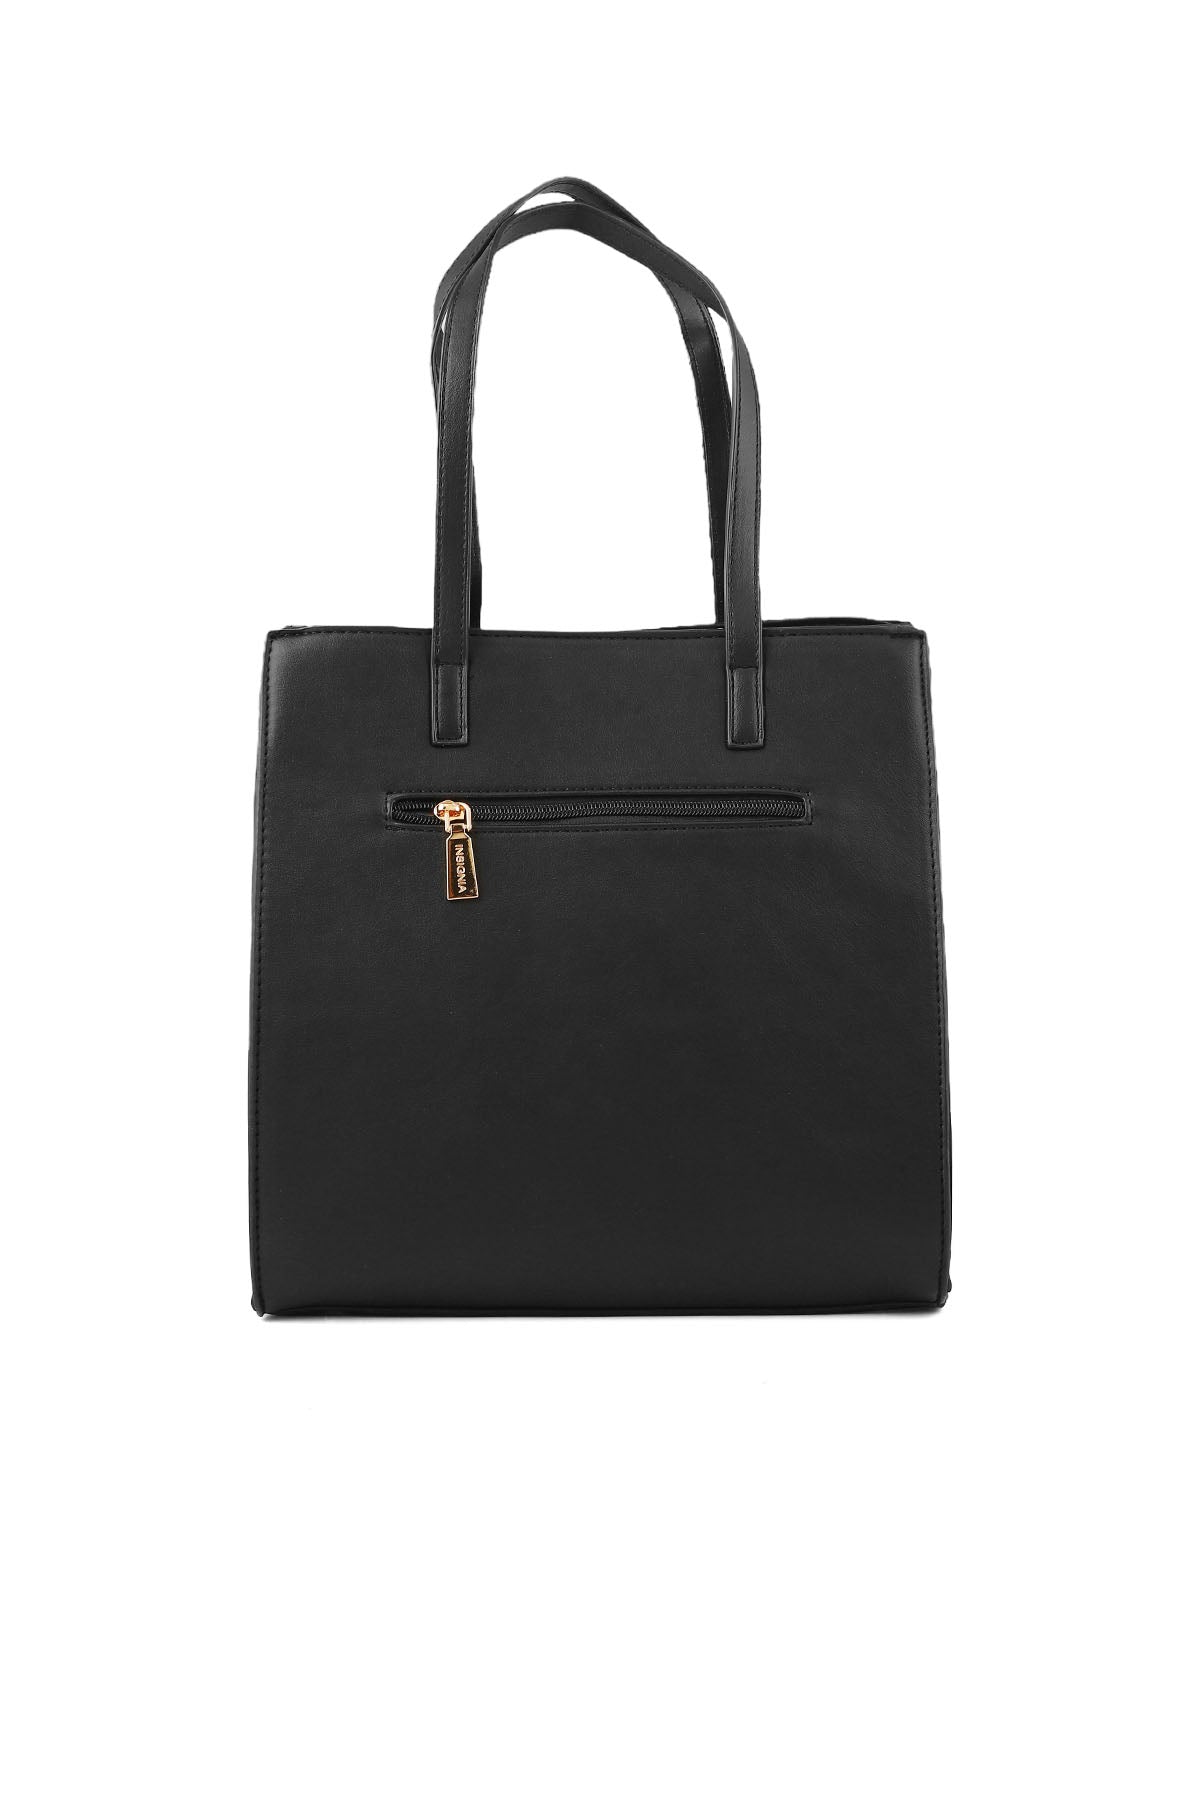 Bucket Hand Bags B15075-Black